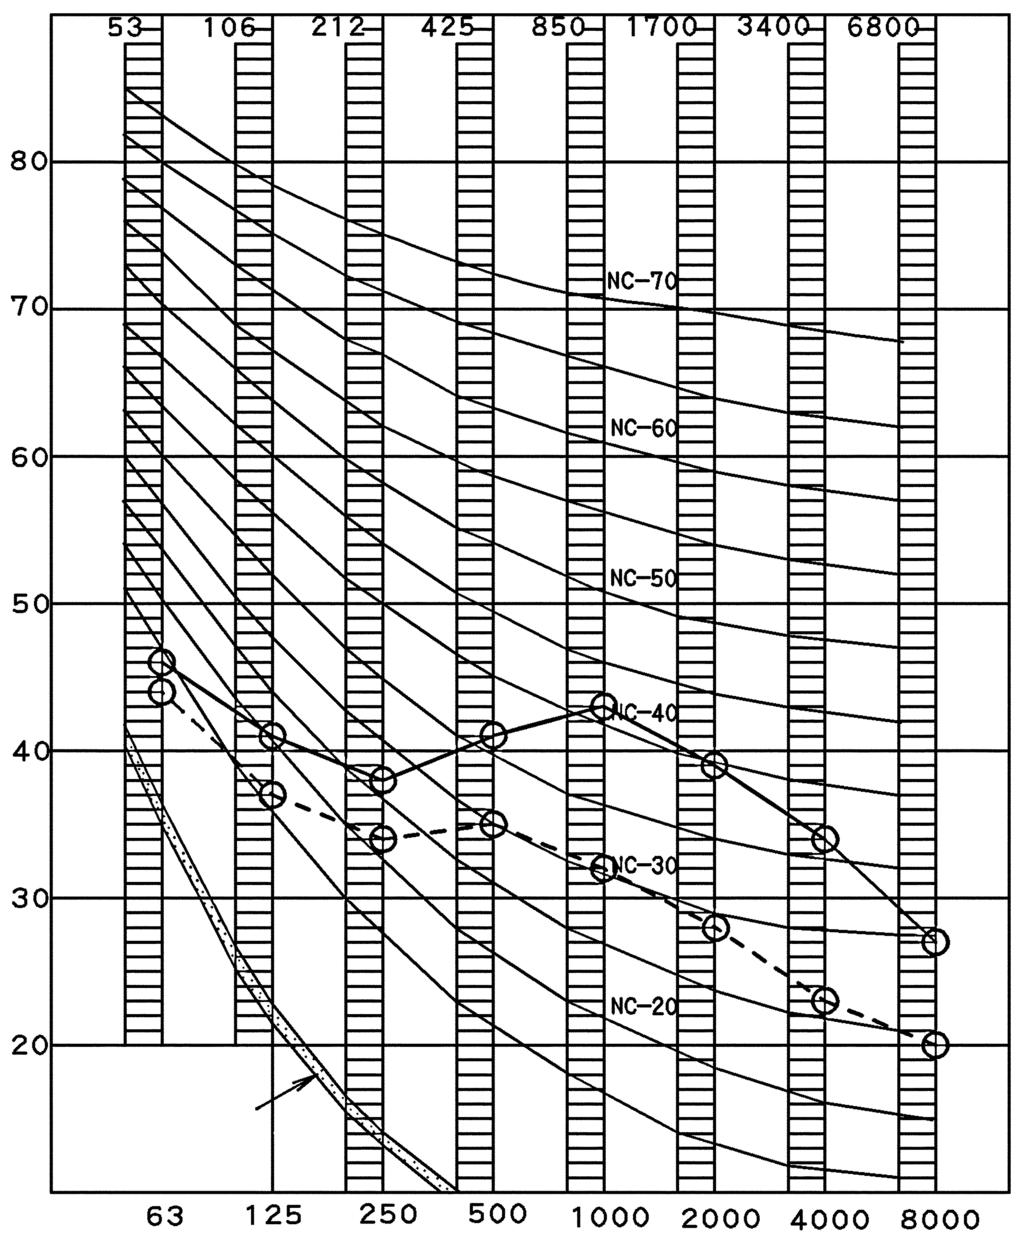 FTXS60GV Octave band sound pressure level db (0 db = 0.0002μ bar) Octave band sound pressure level db (0 db = 0.